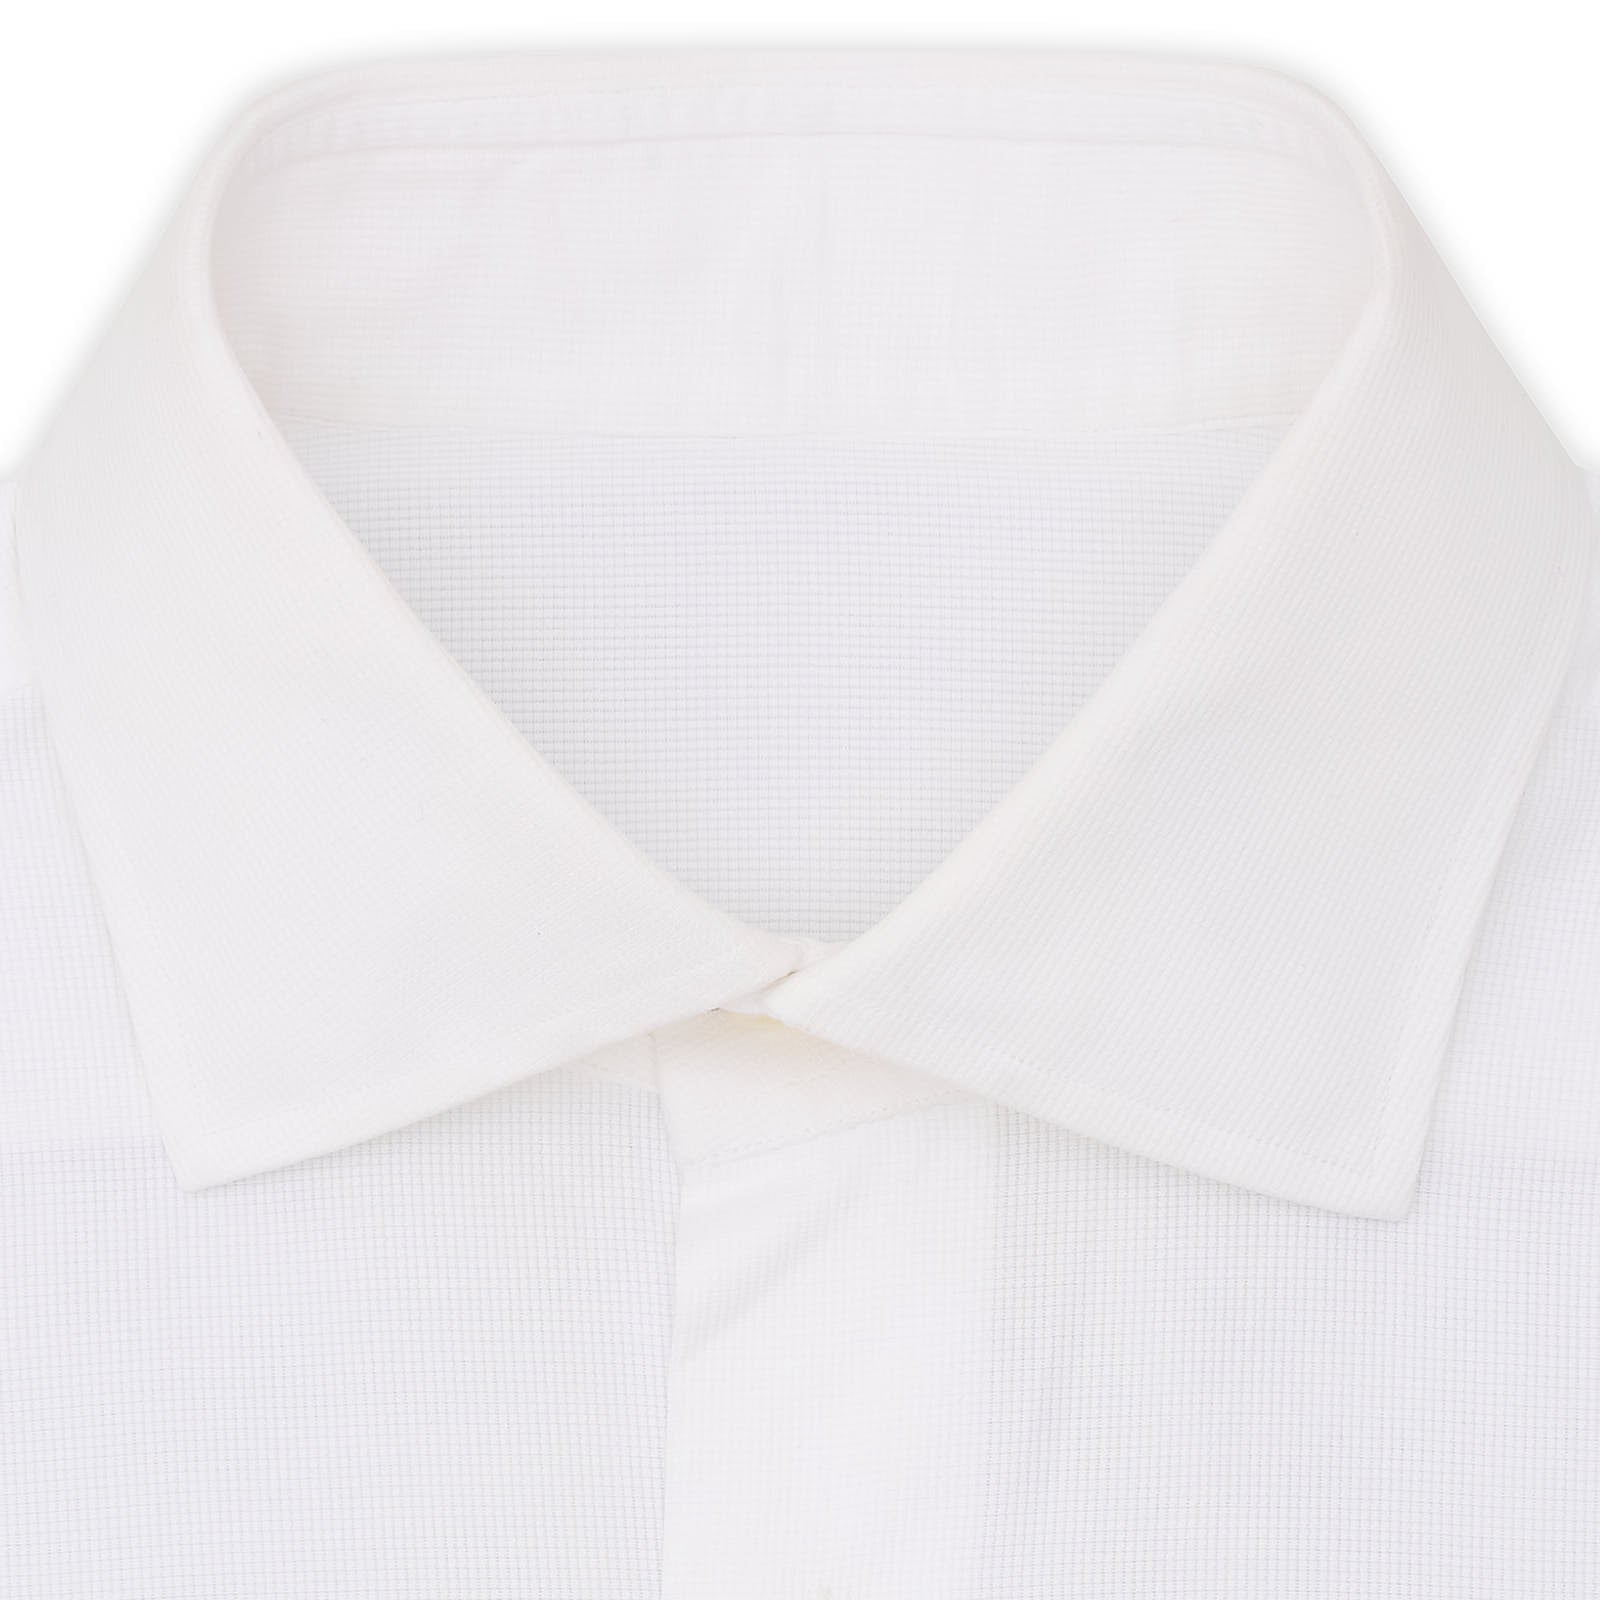 BESPOKE ATHENS Handmade White Dobby Cotton French Cuff Shirt EU 38 NEW US 15